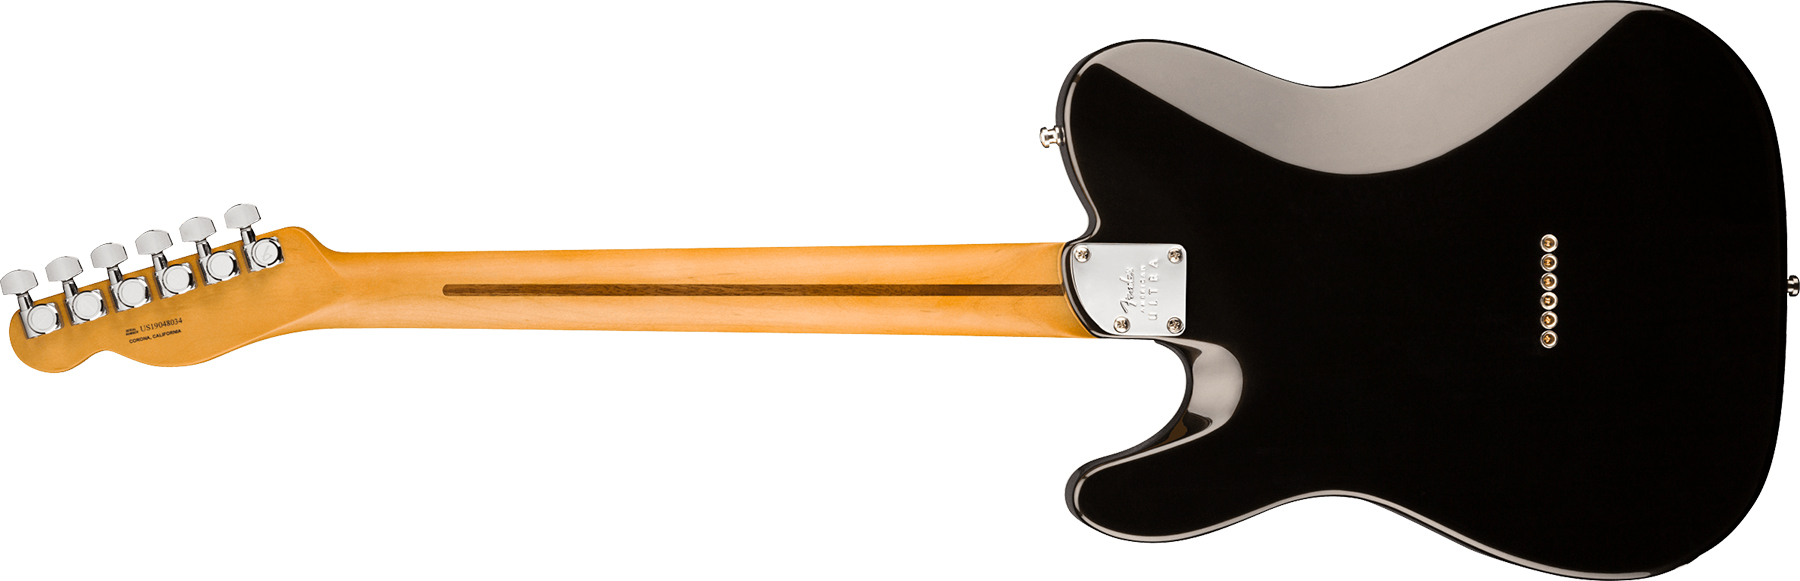 Fender Tele American Ultra 2019 Usa Rw - Texas Tea - Tel shape electric guitar - Variation 1